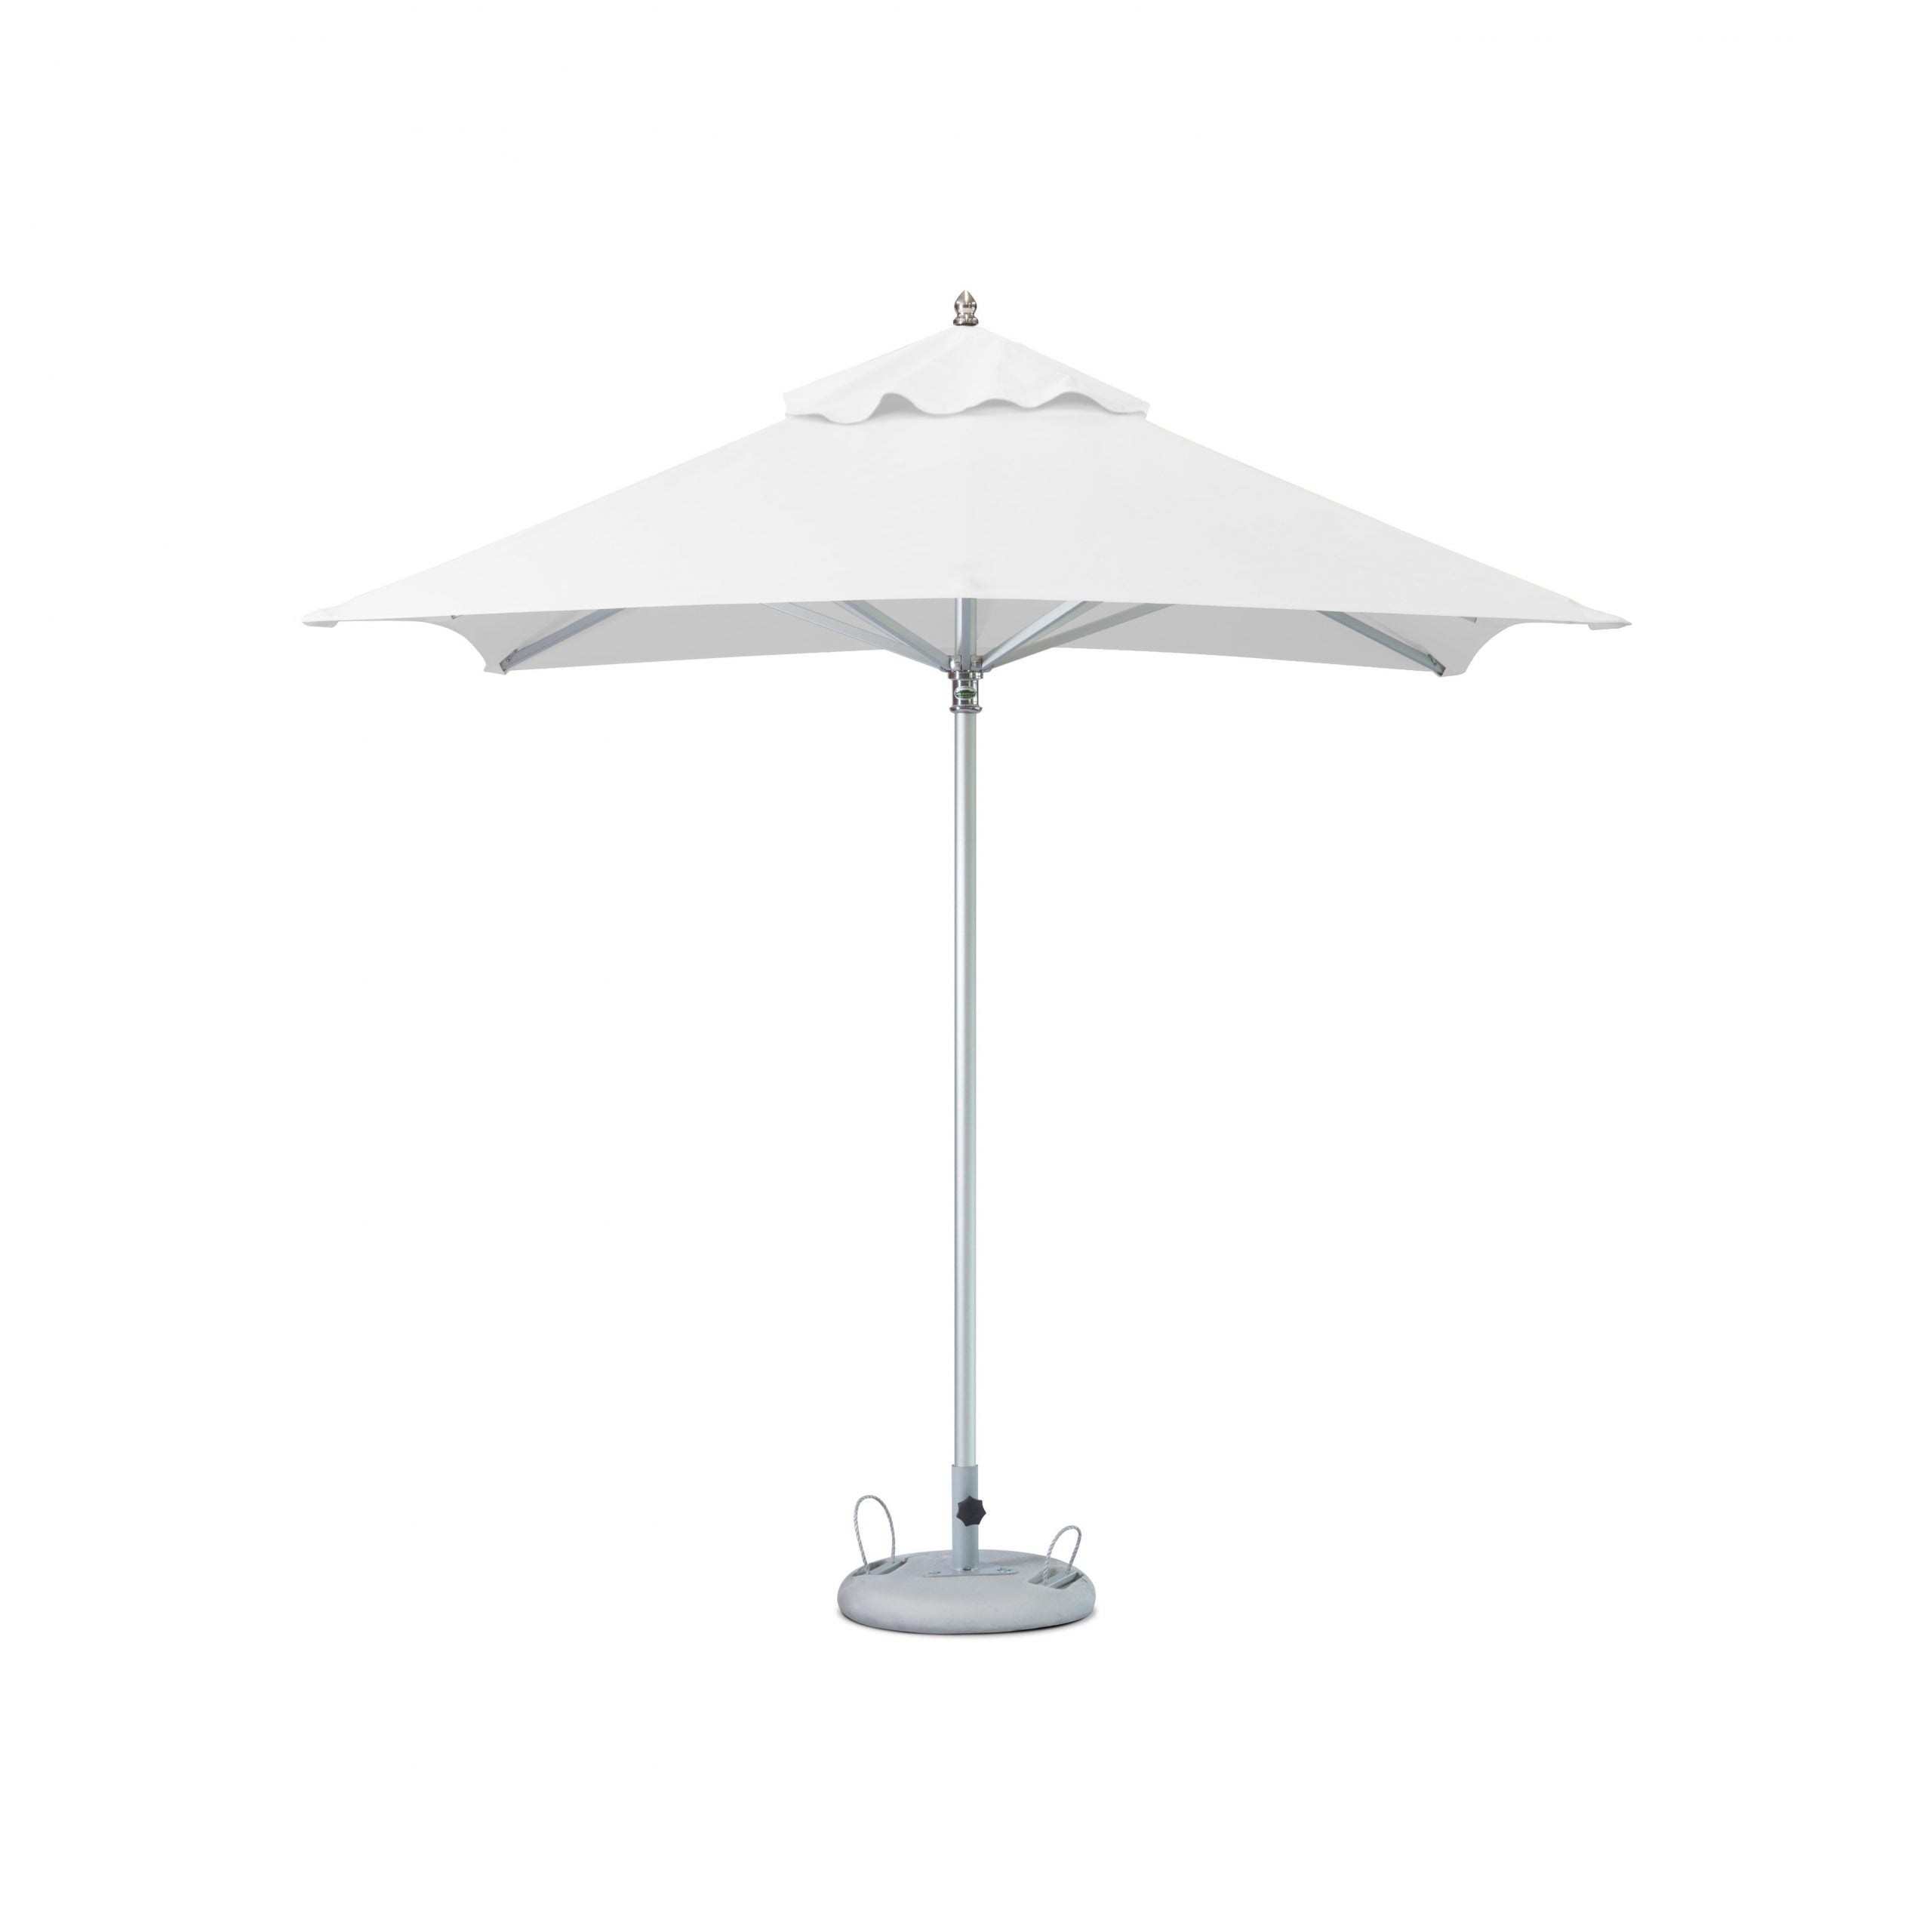 Cape 8.2 x 8.2 ft Automatic Square Outdoor Umbrella